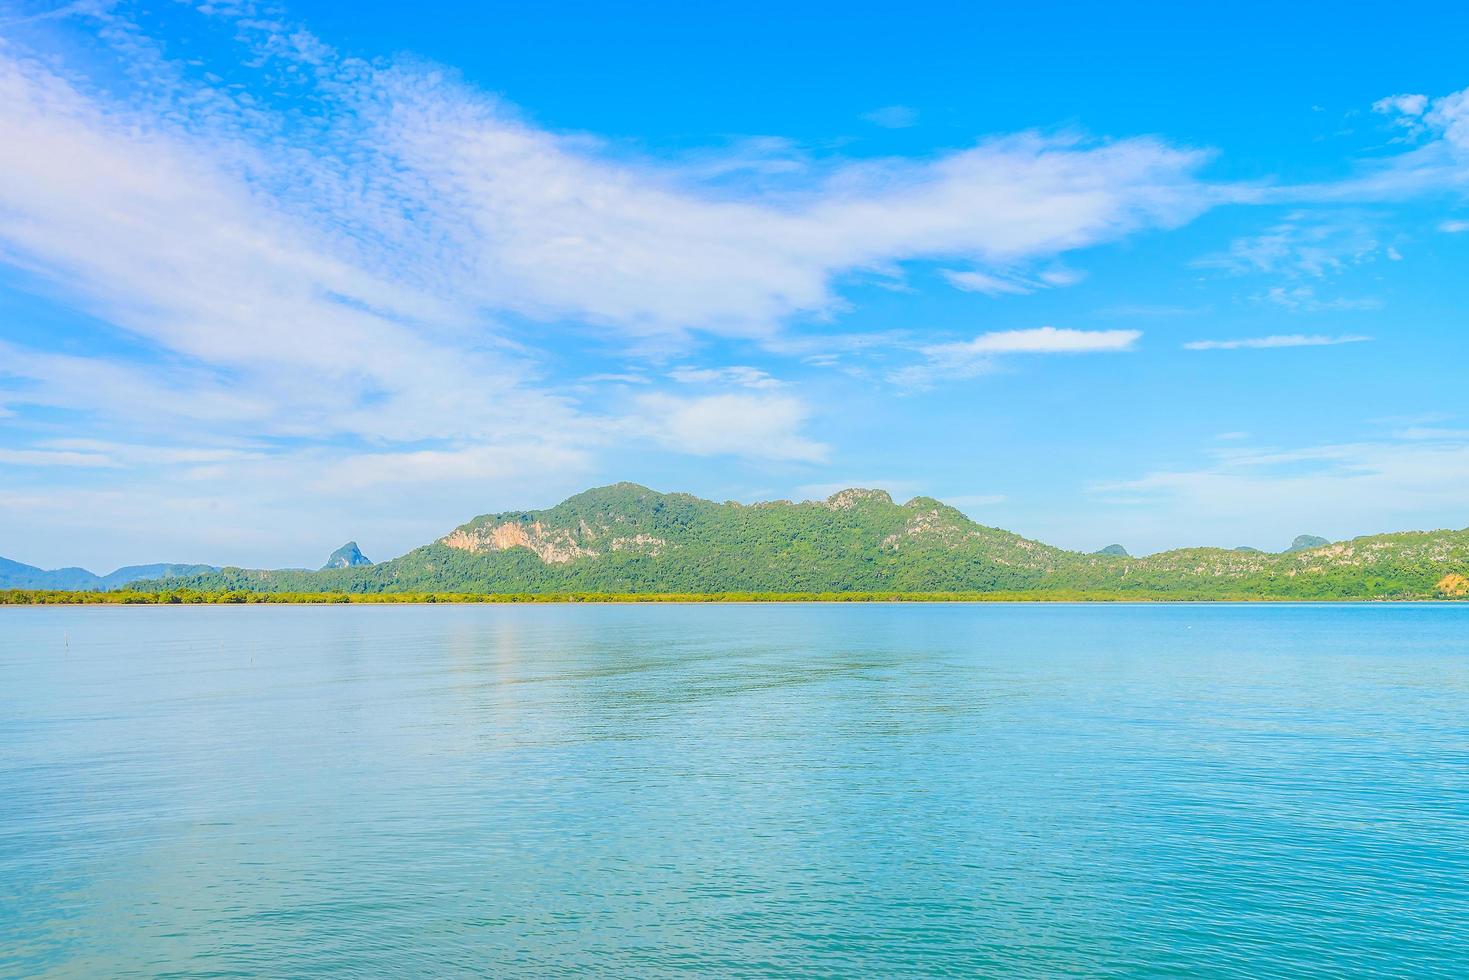 Beautiful tropical island  and sea in thailand photo